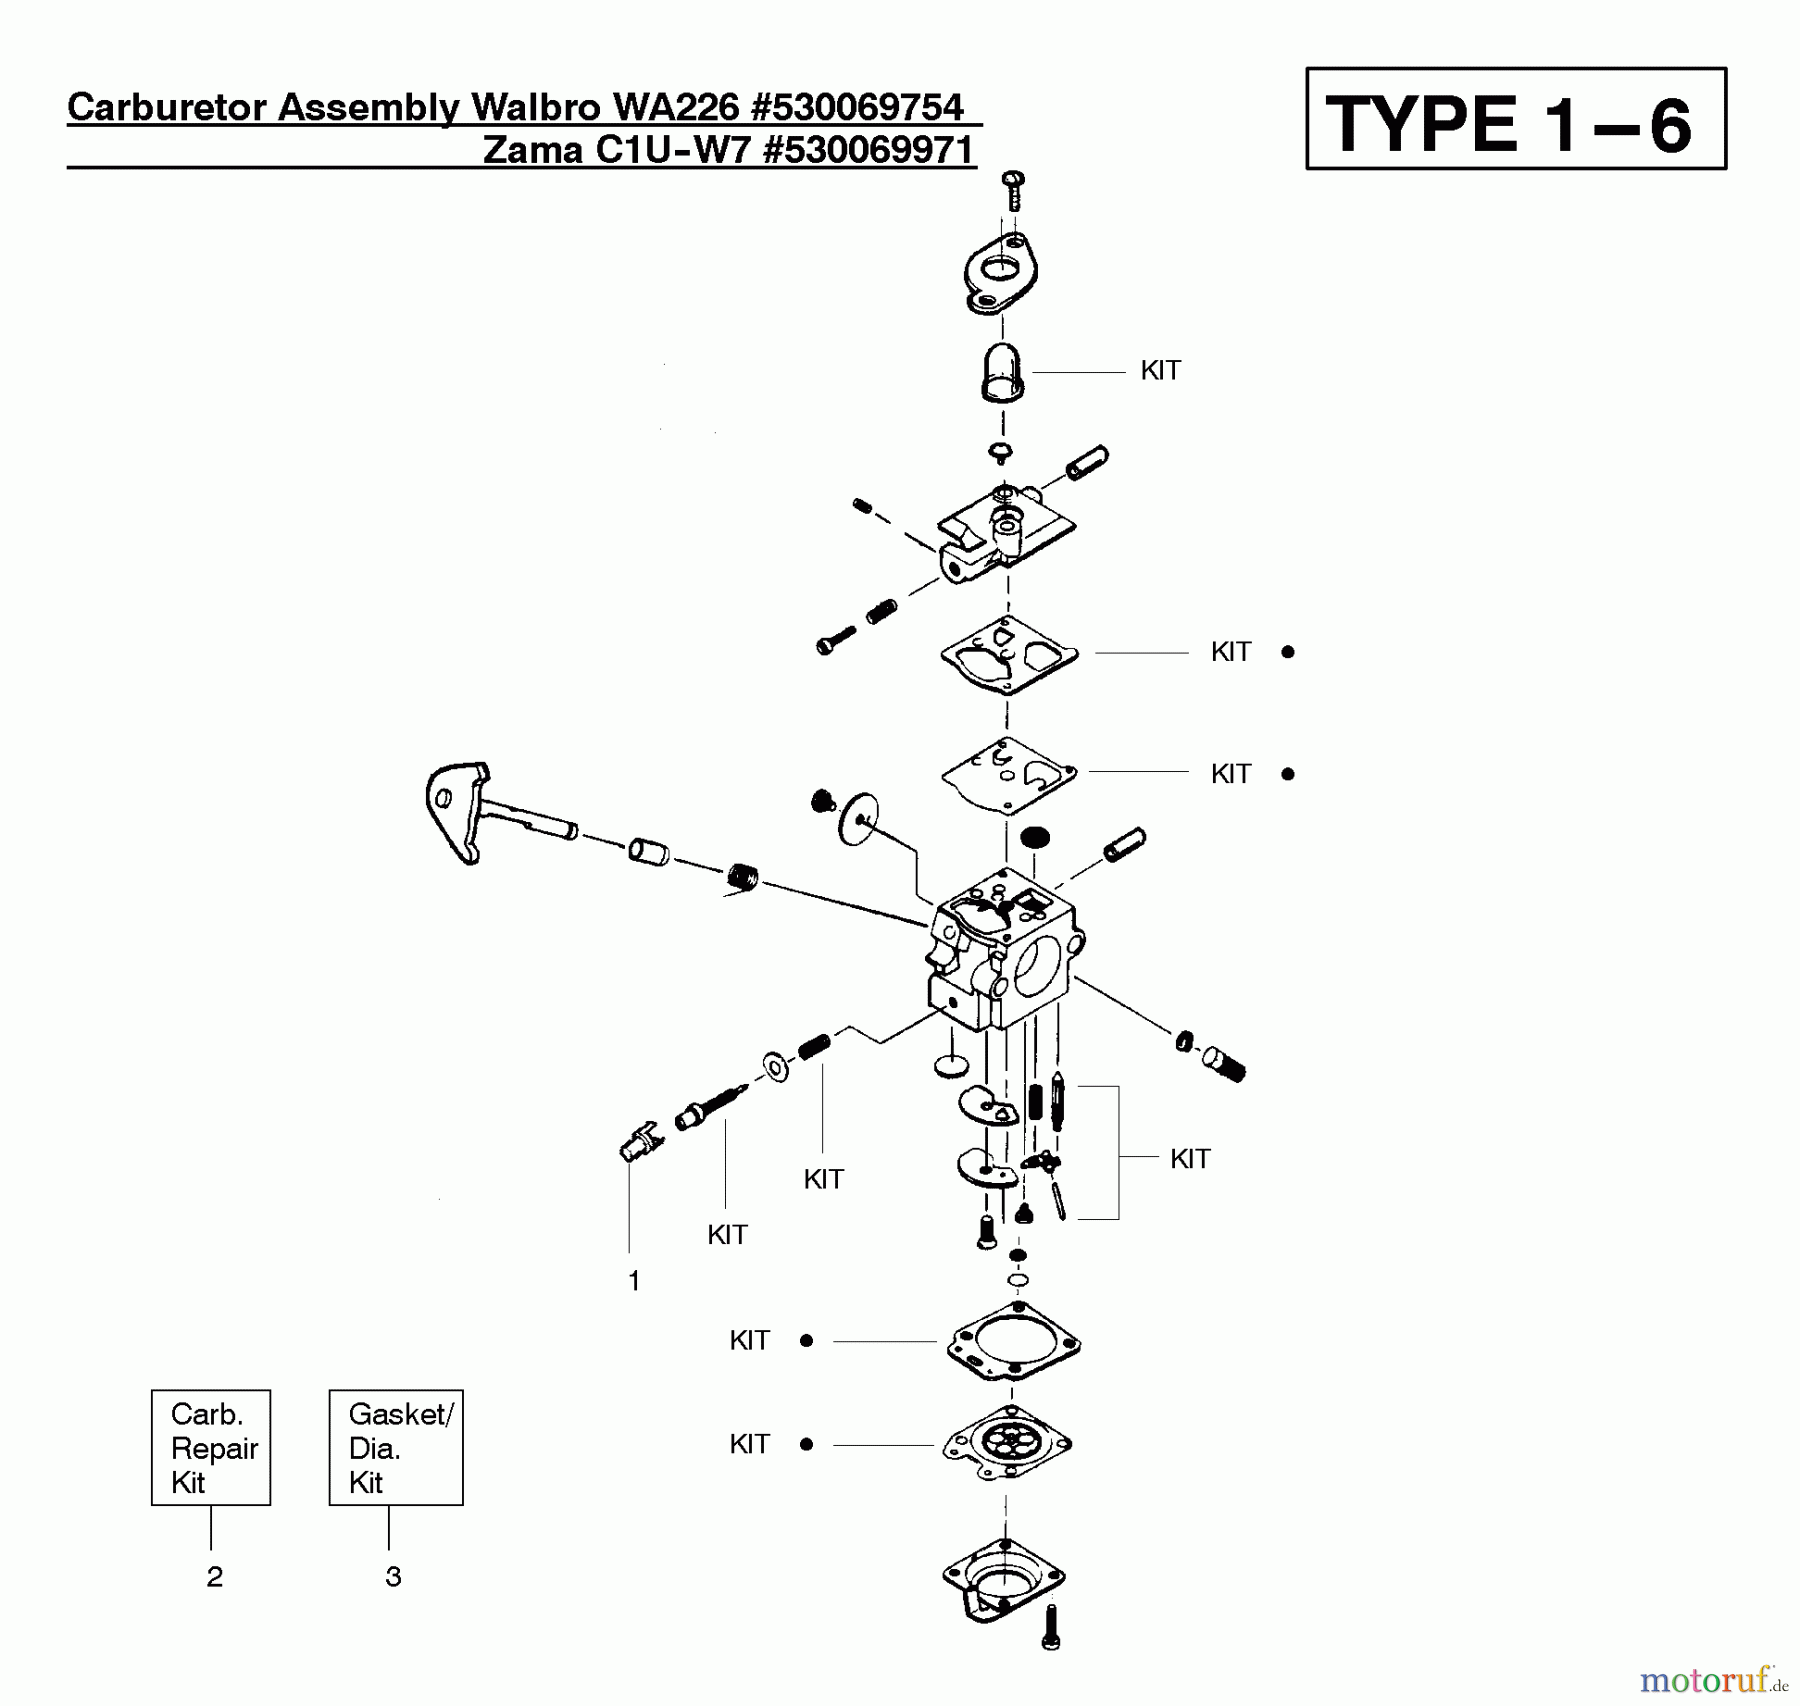  Poulan / Weed Eater Motorsensen, Trimmer XT600 (Type 6) - Weed Eater String Trimmer Carburetor Assembly (WT226) 530069754, (Zama C1U-W7) 530069971